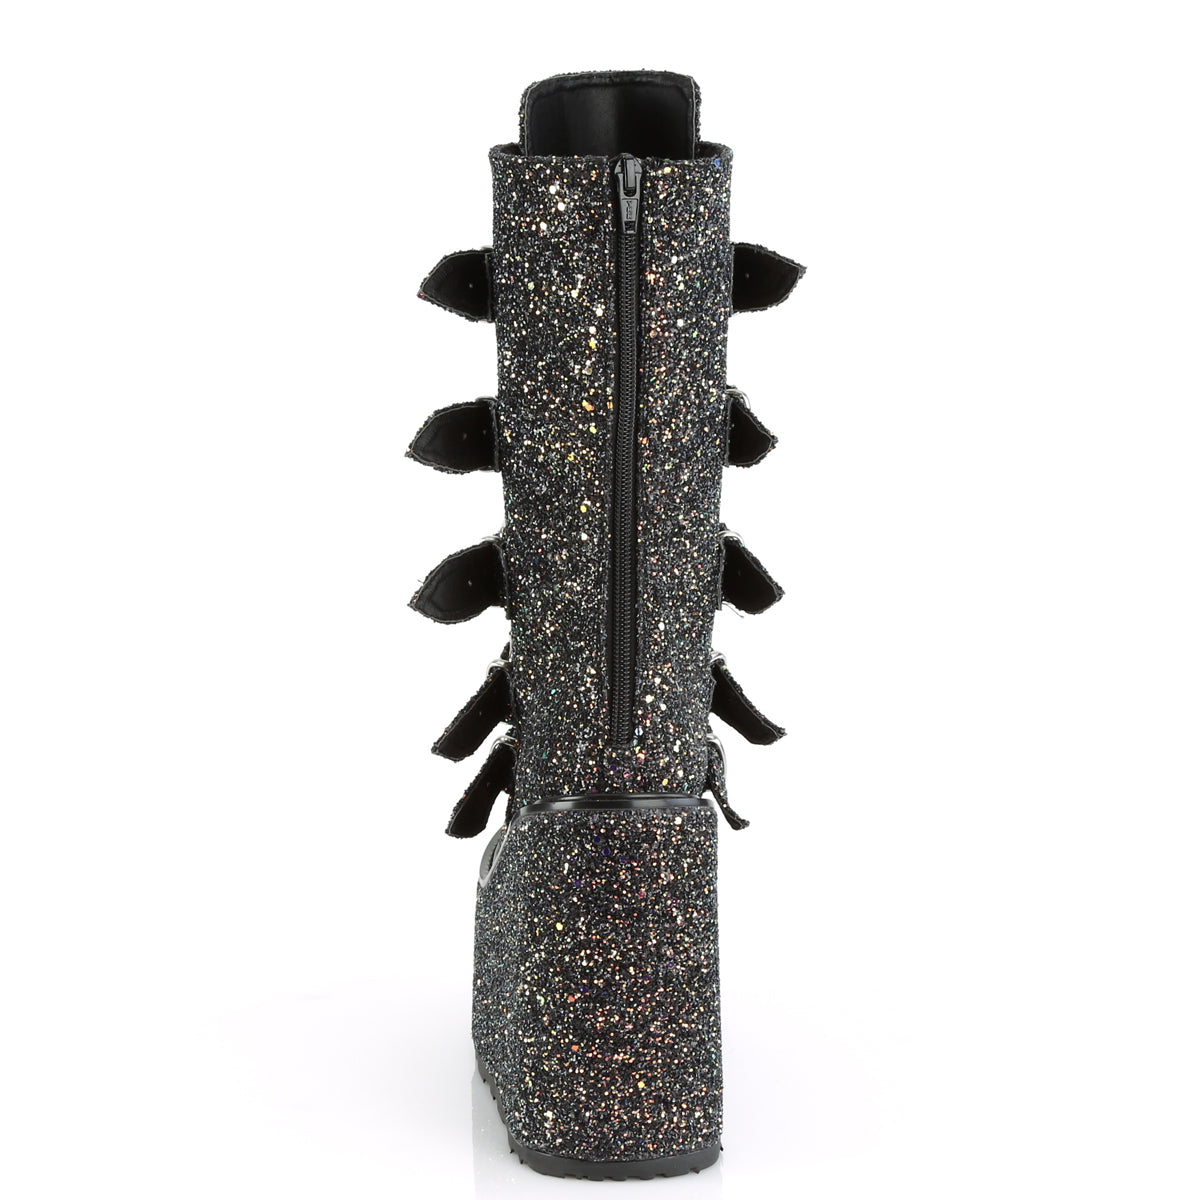 SWING-230G Demonia Black Multi Glitter Women's Mid-Calf & Knee High Boots [Demonia Cult Alternative Footwear]